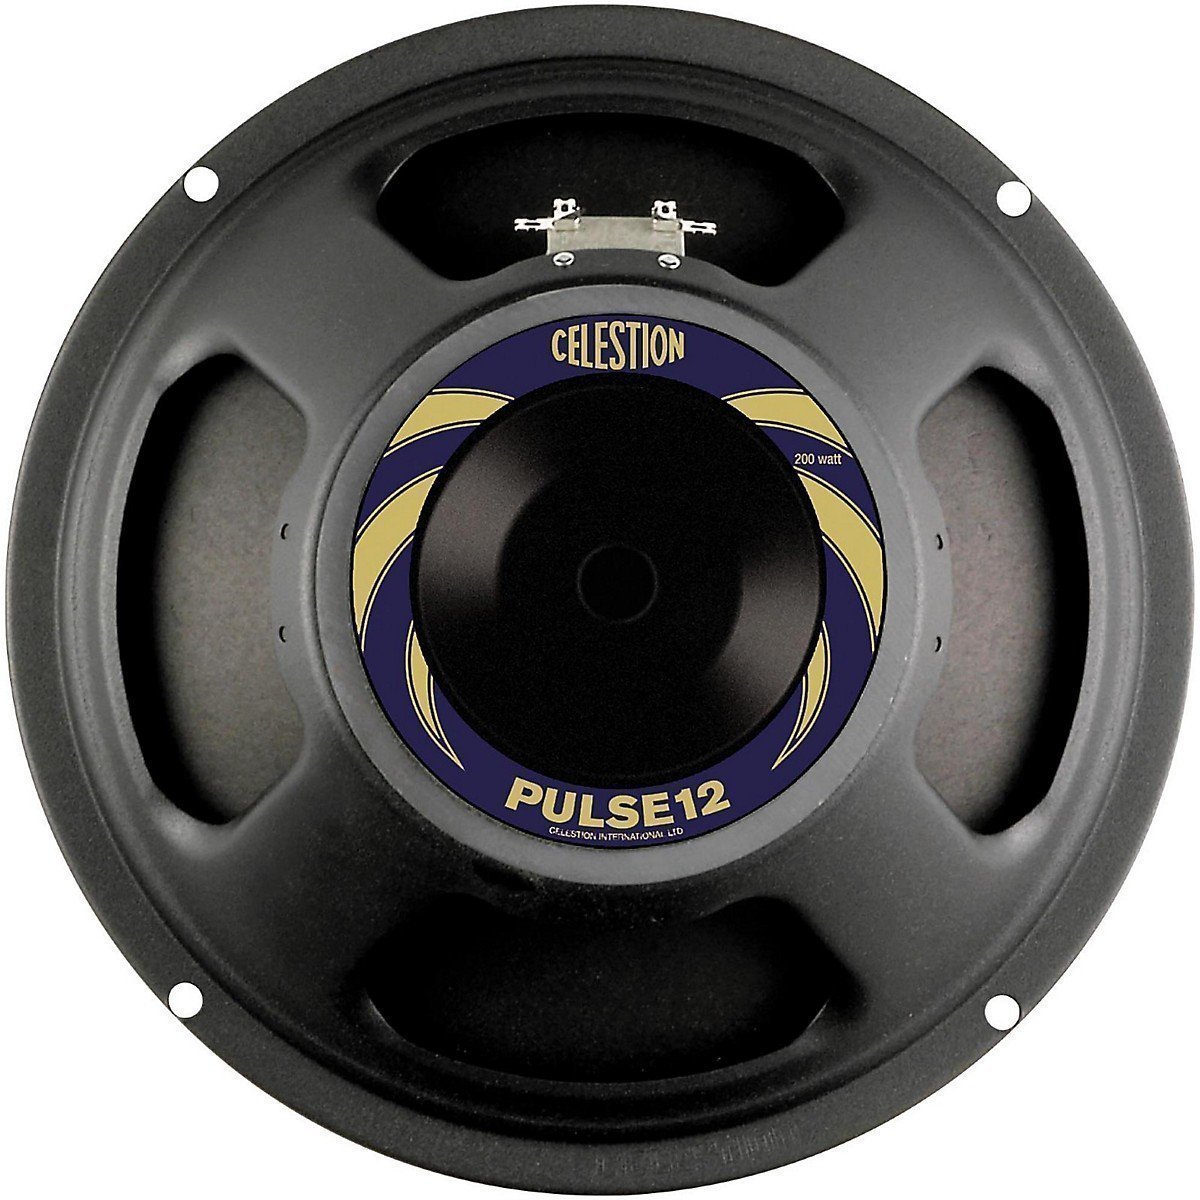 Bass Speaker / Subwoofer Celestion Pulse 12 8ohm